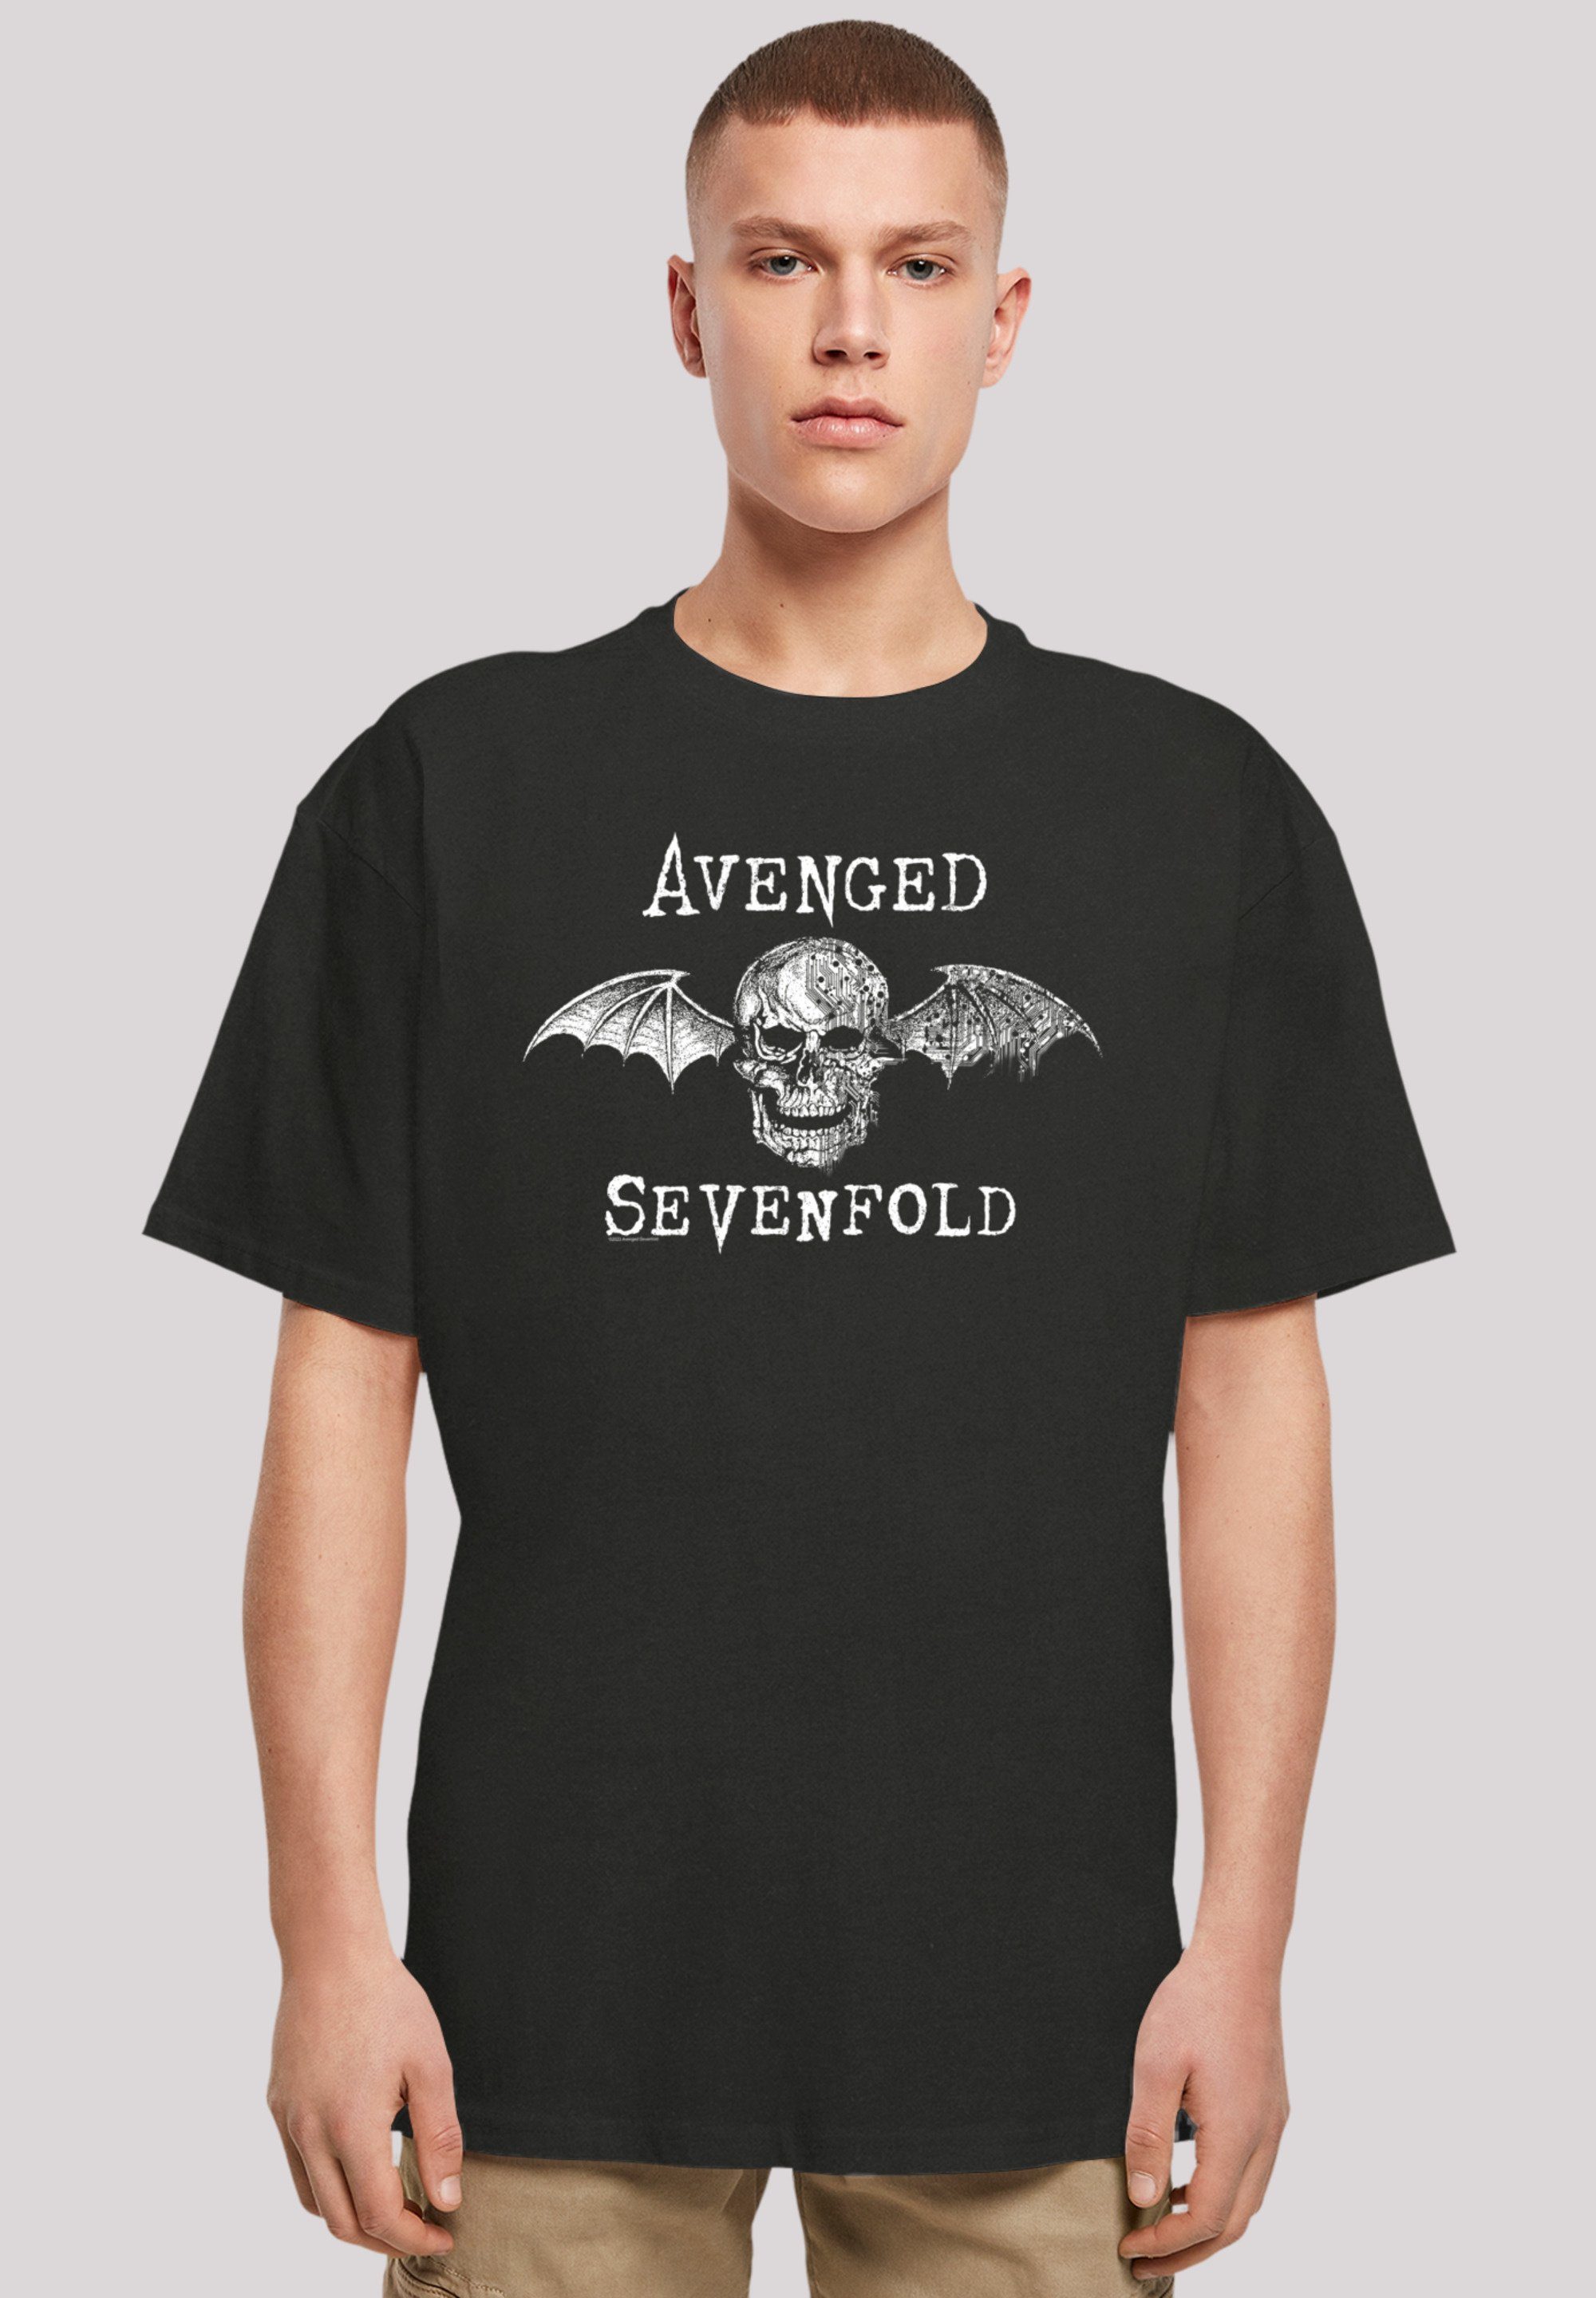 Bat Cyborg Sevenfold Rock-Musik Metal schwarz Rock T-Shirt Qualität, Avenged F4NT4STIC Band Premium Band,